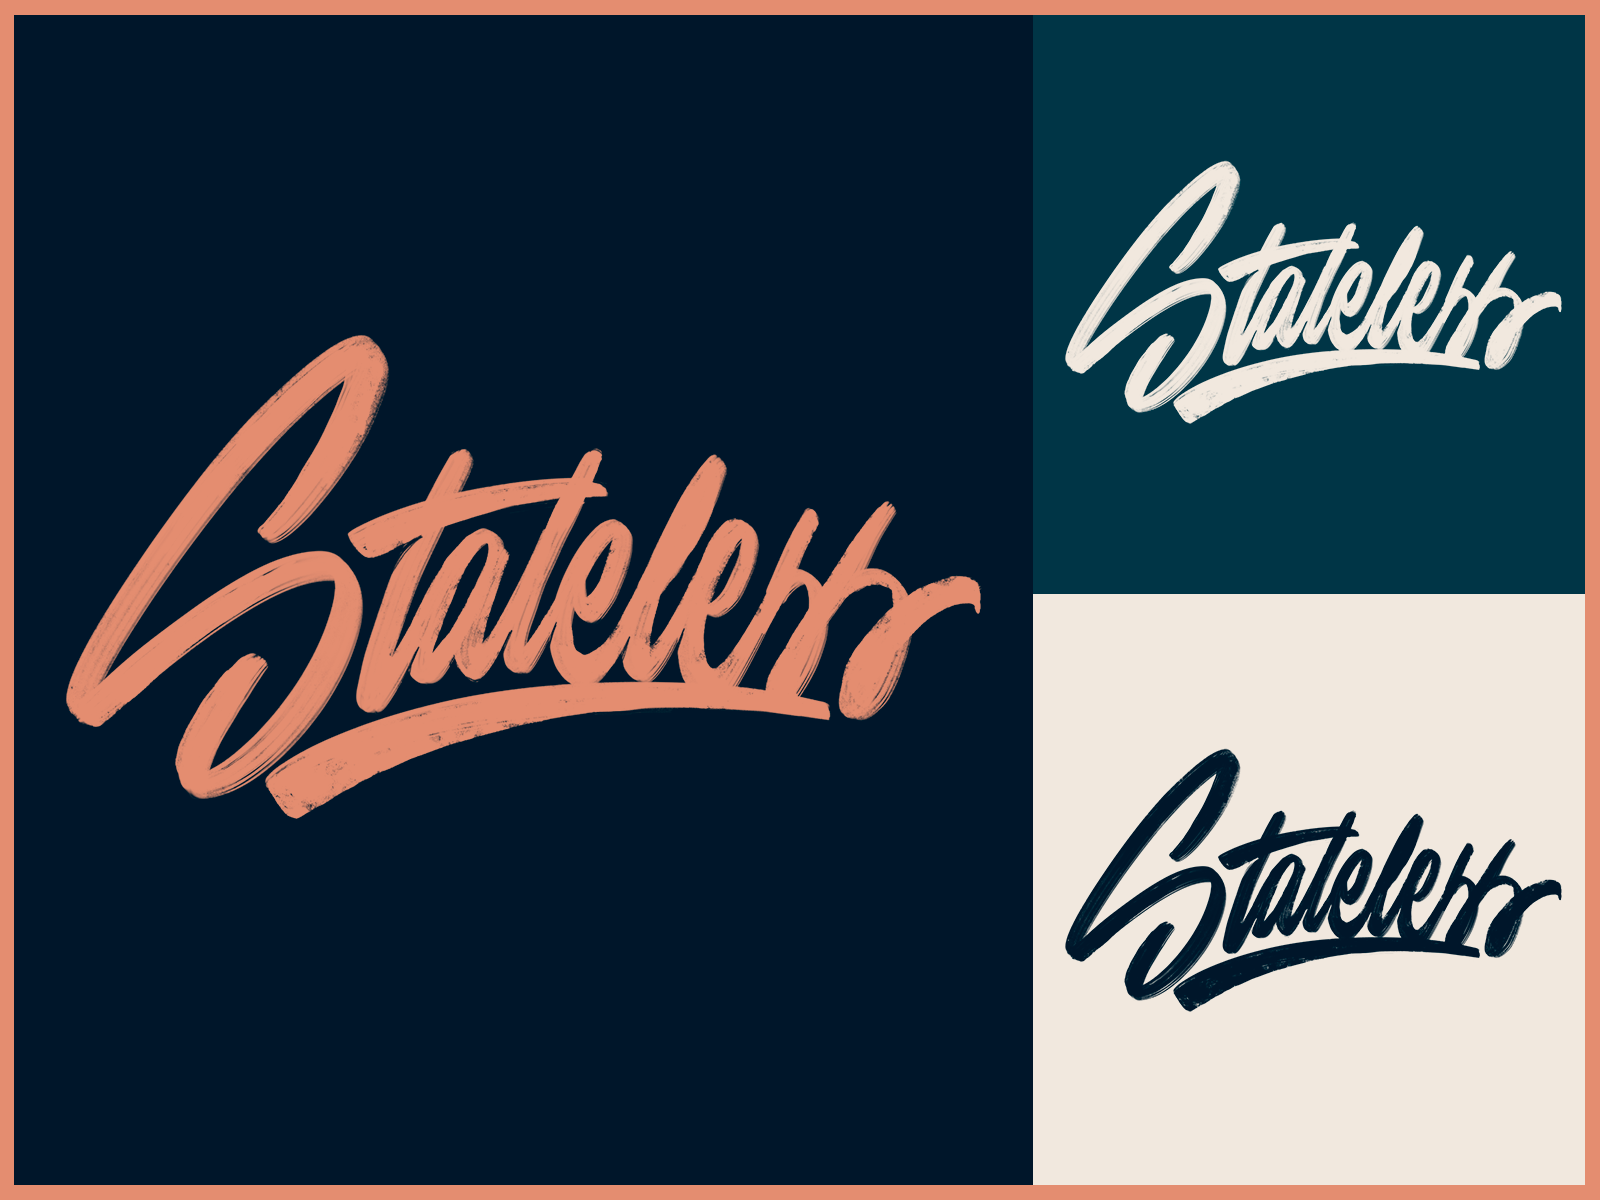 Stateless - Lettering Logo Sketch for Streetwear Brand by Yevdokimov on ...